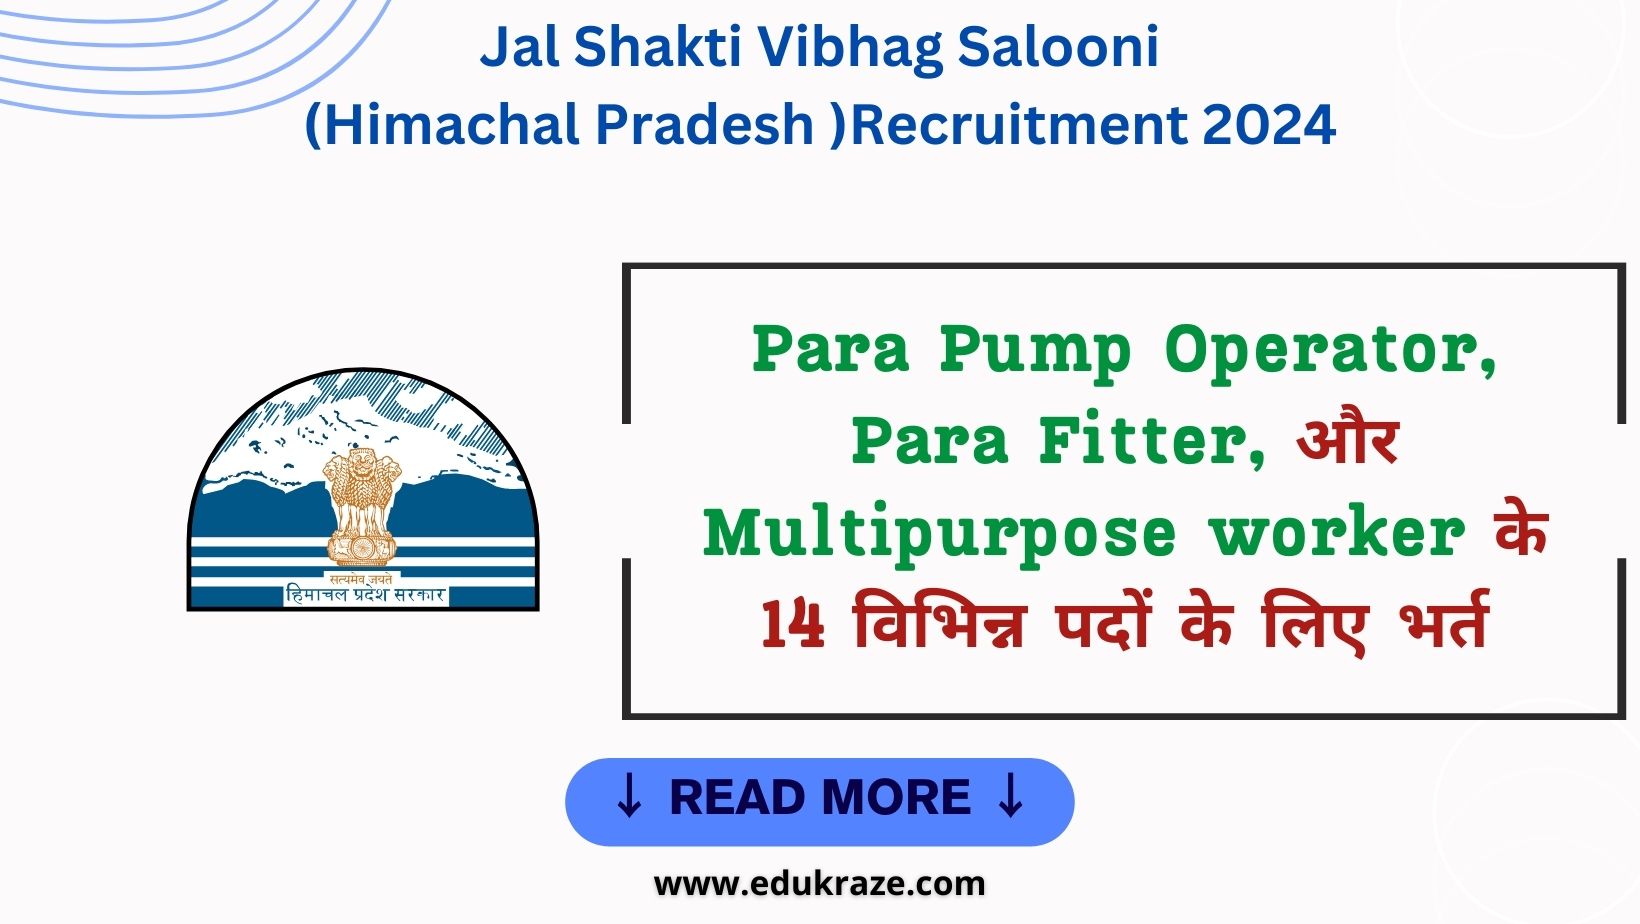 HP Jal Shakti Vibhag Division Salooni Recruitment 2024 for Para Pump Operator, Para Fitter & Multipurpose Worker